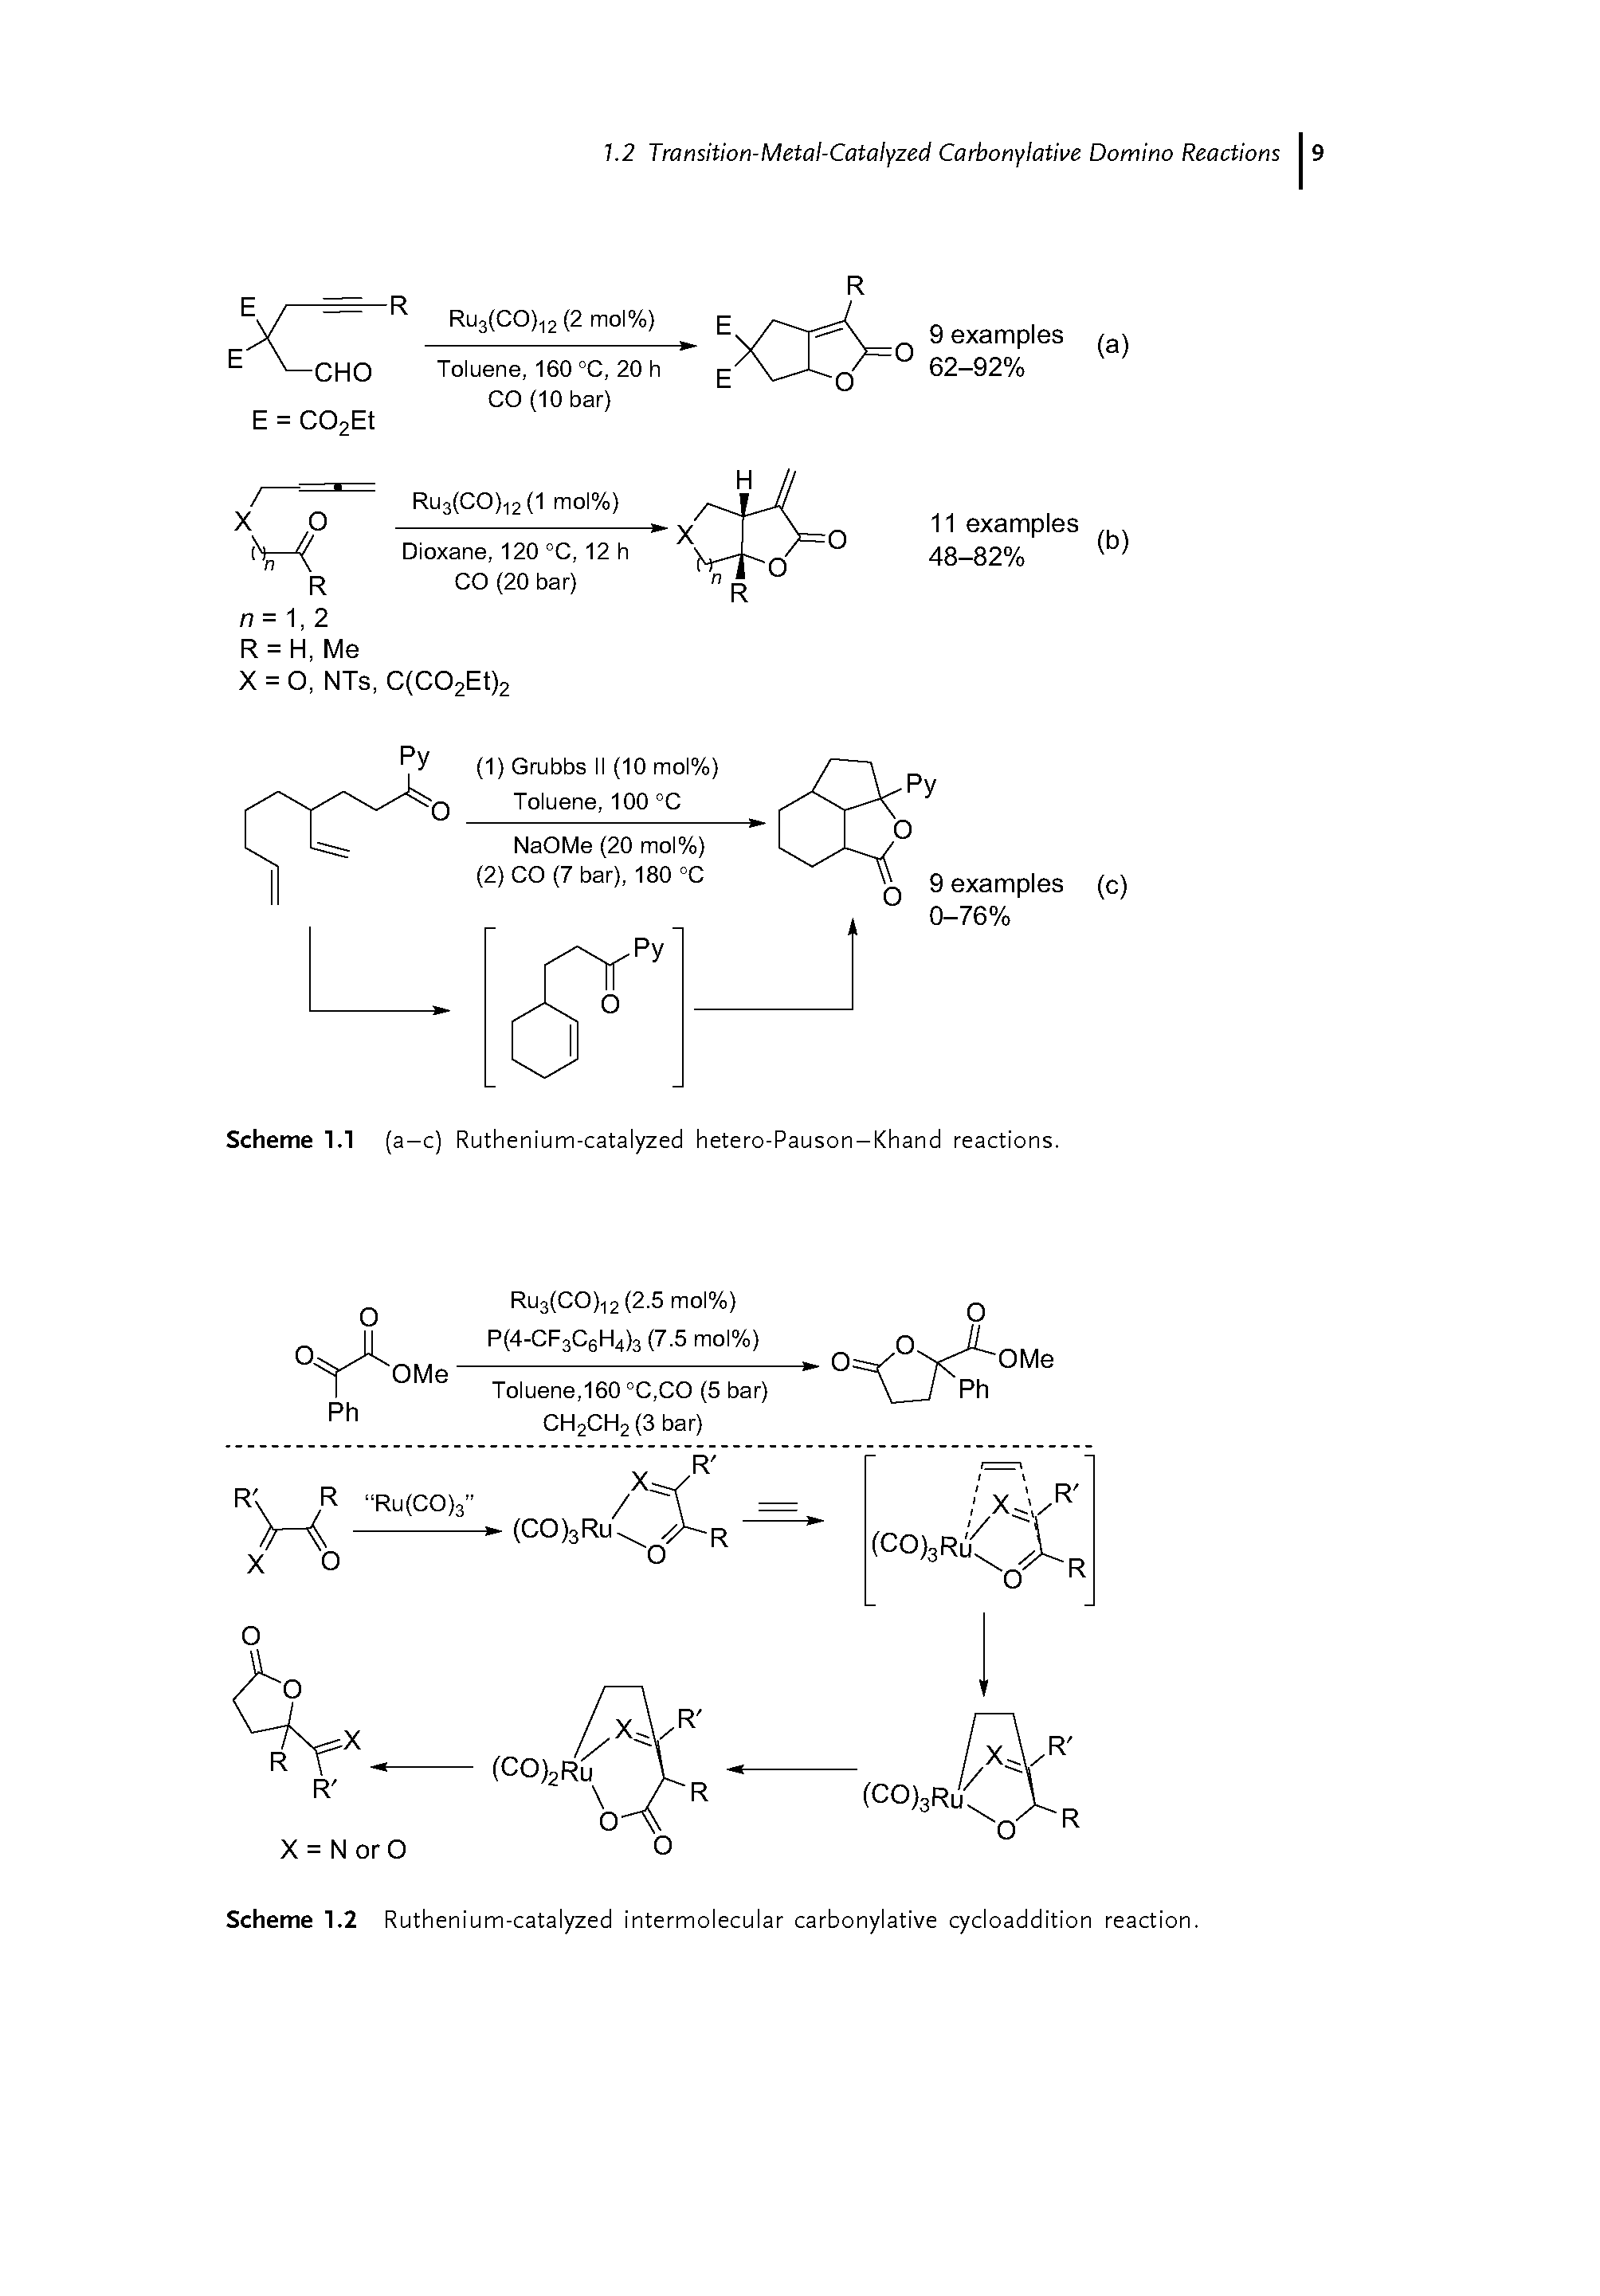 Scheme 1.2 Ruthenium-catalyzed intermolecular carbonylative cycloaddition reaction.